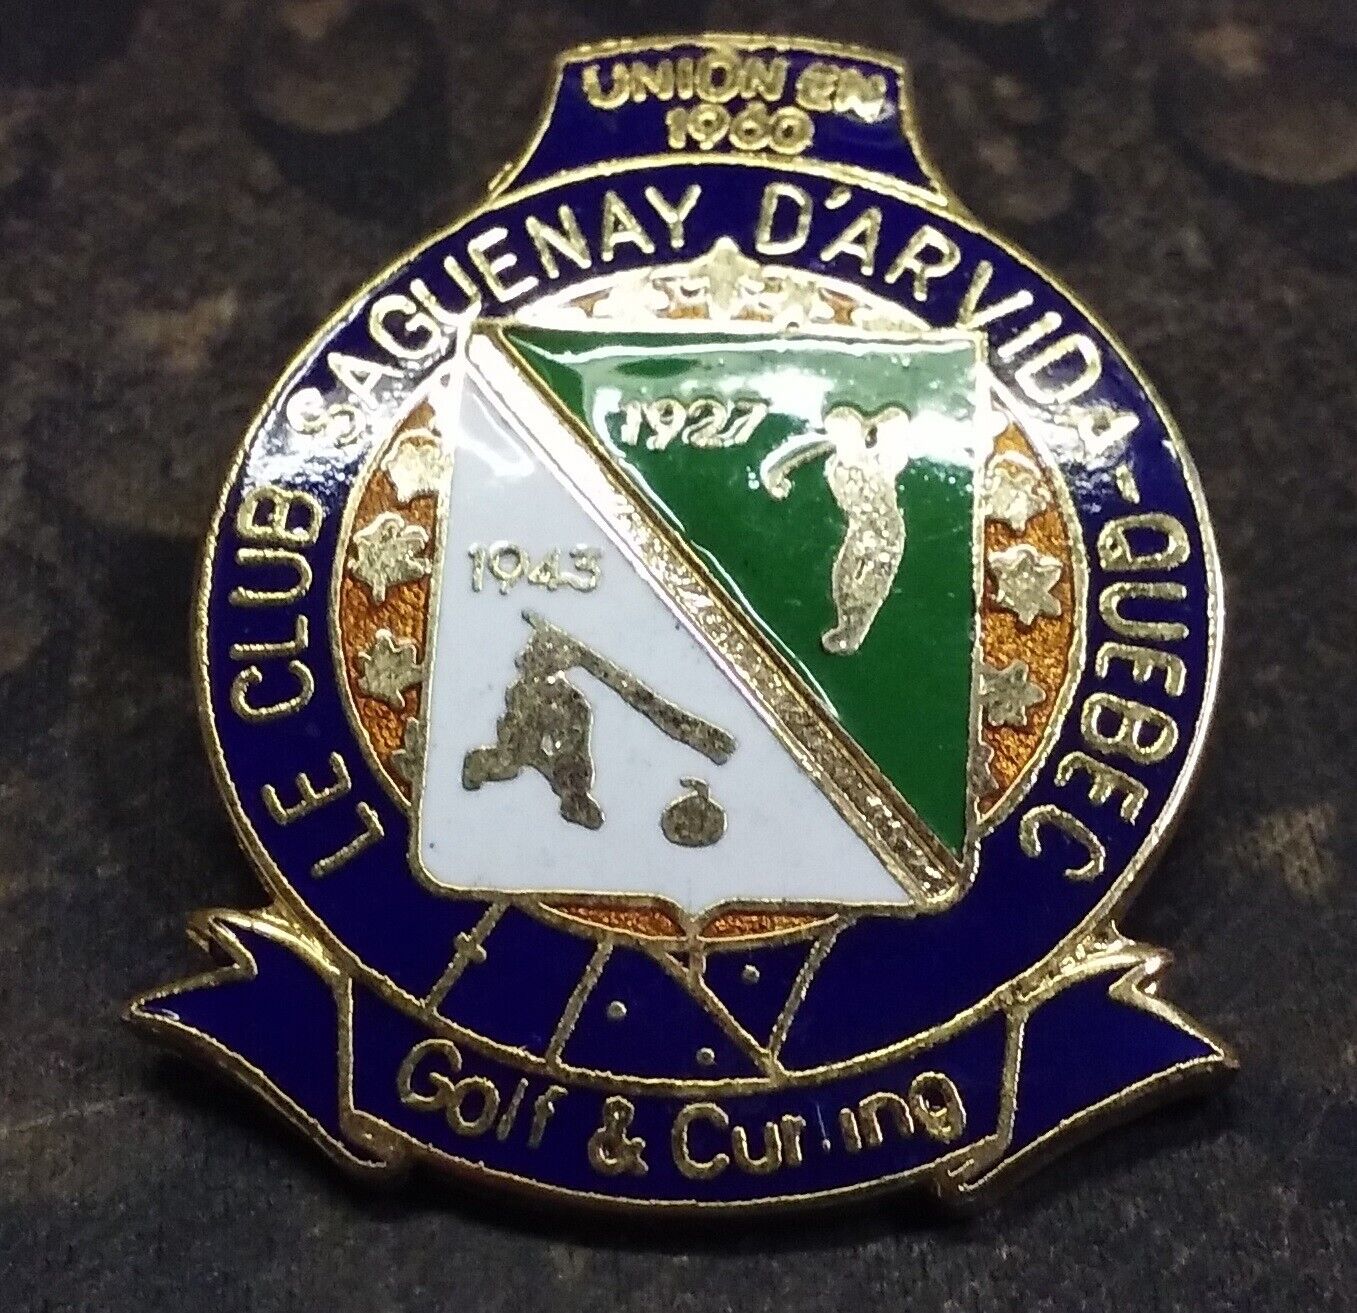 Le Club Saguenay D\'arvida Quebec Golf and Curling vintage pin badge